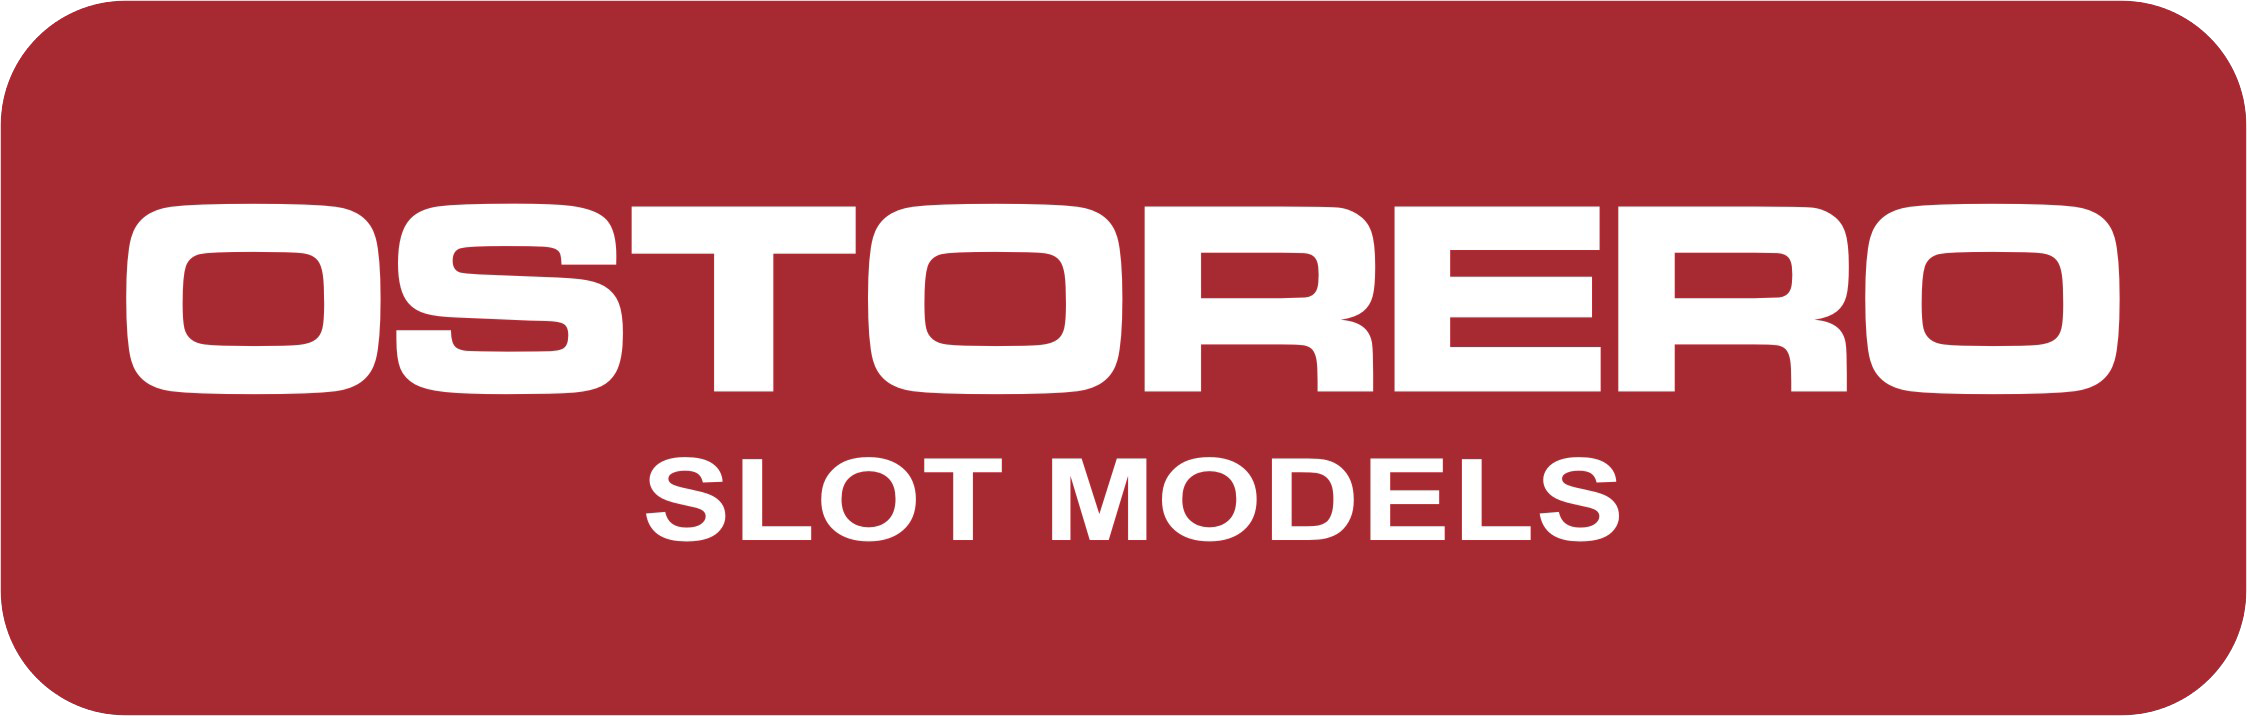 Ostorero Slot Models